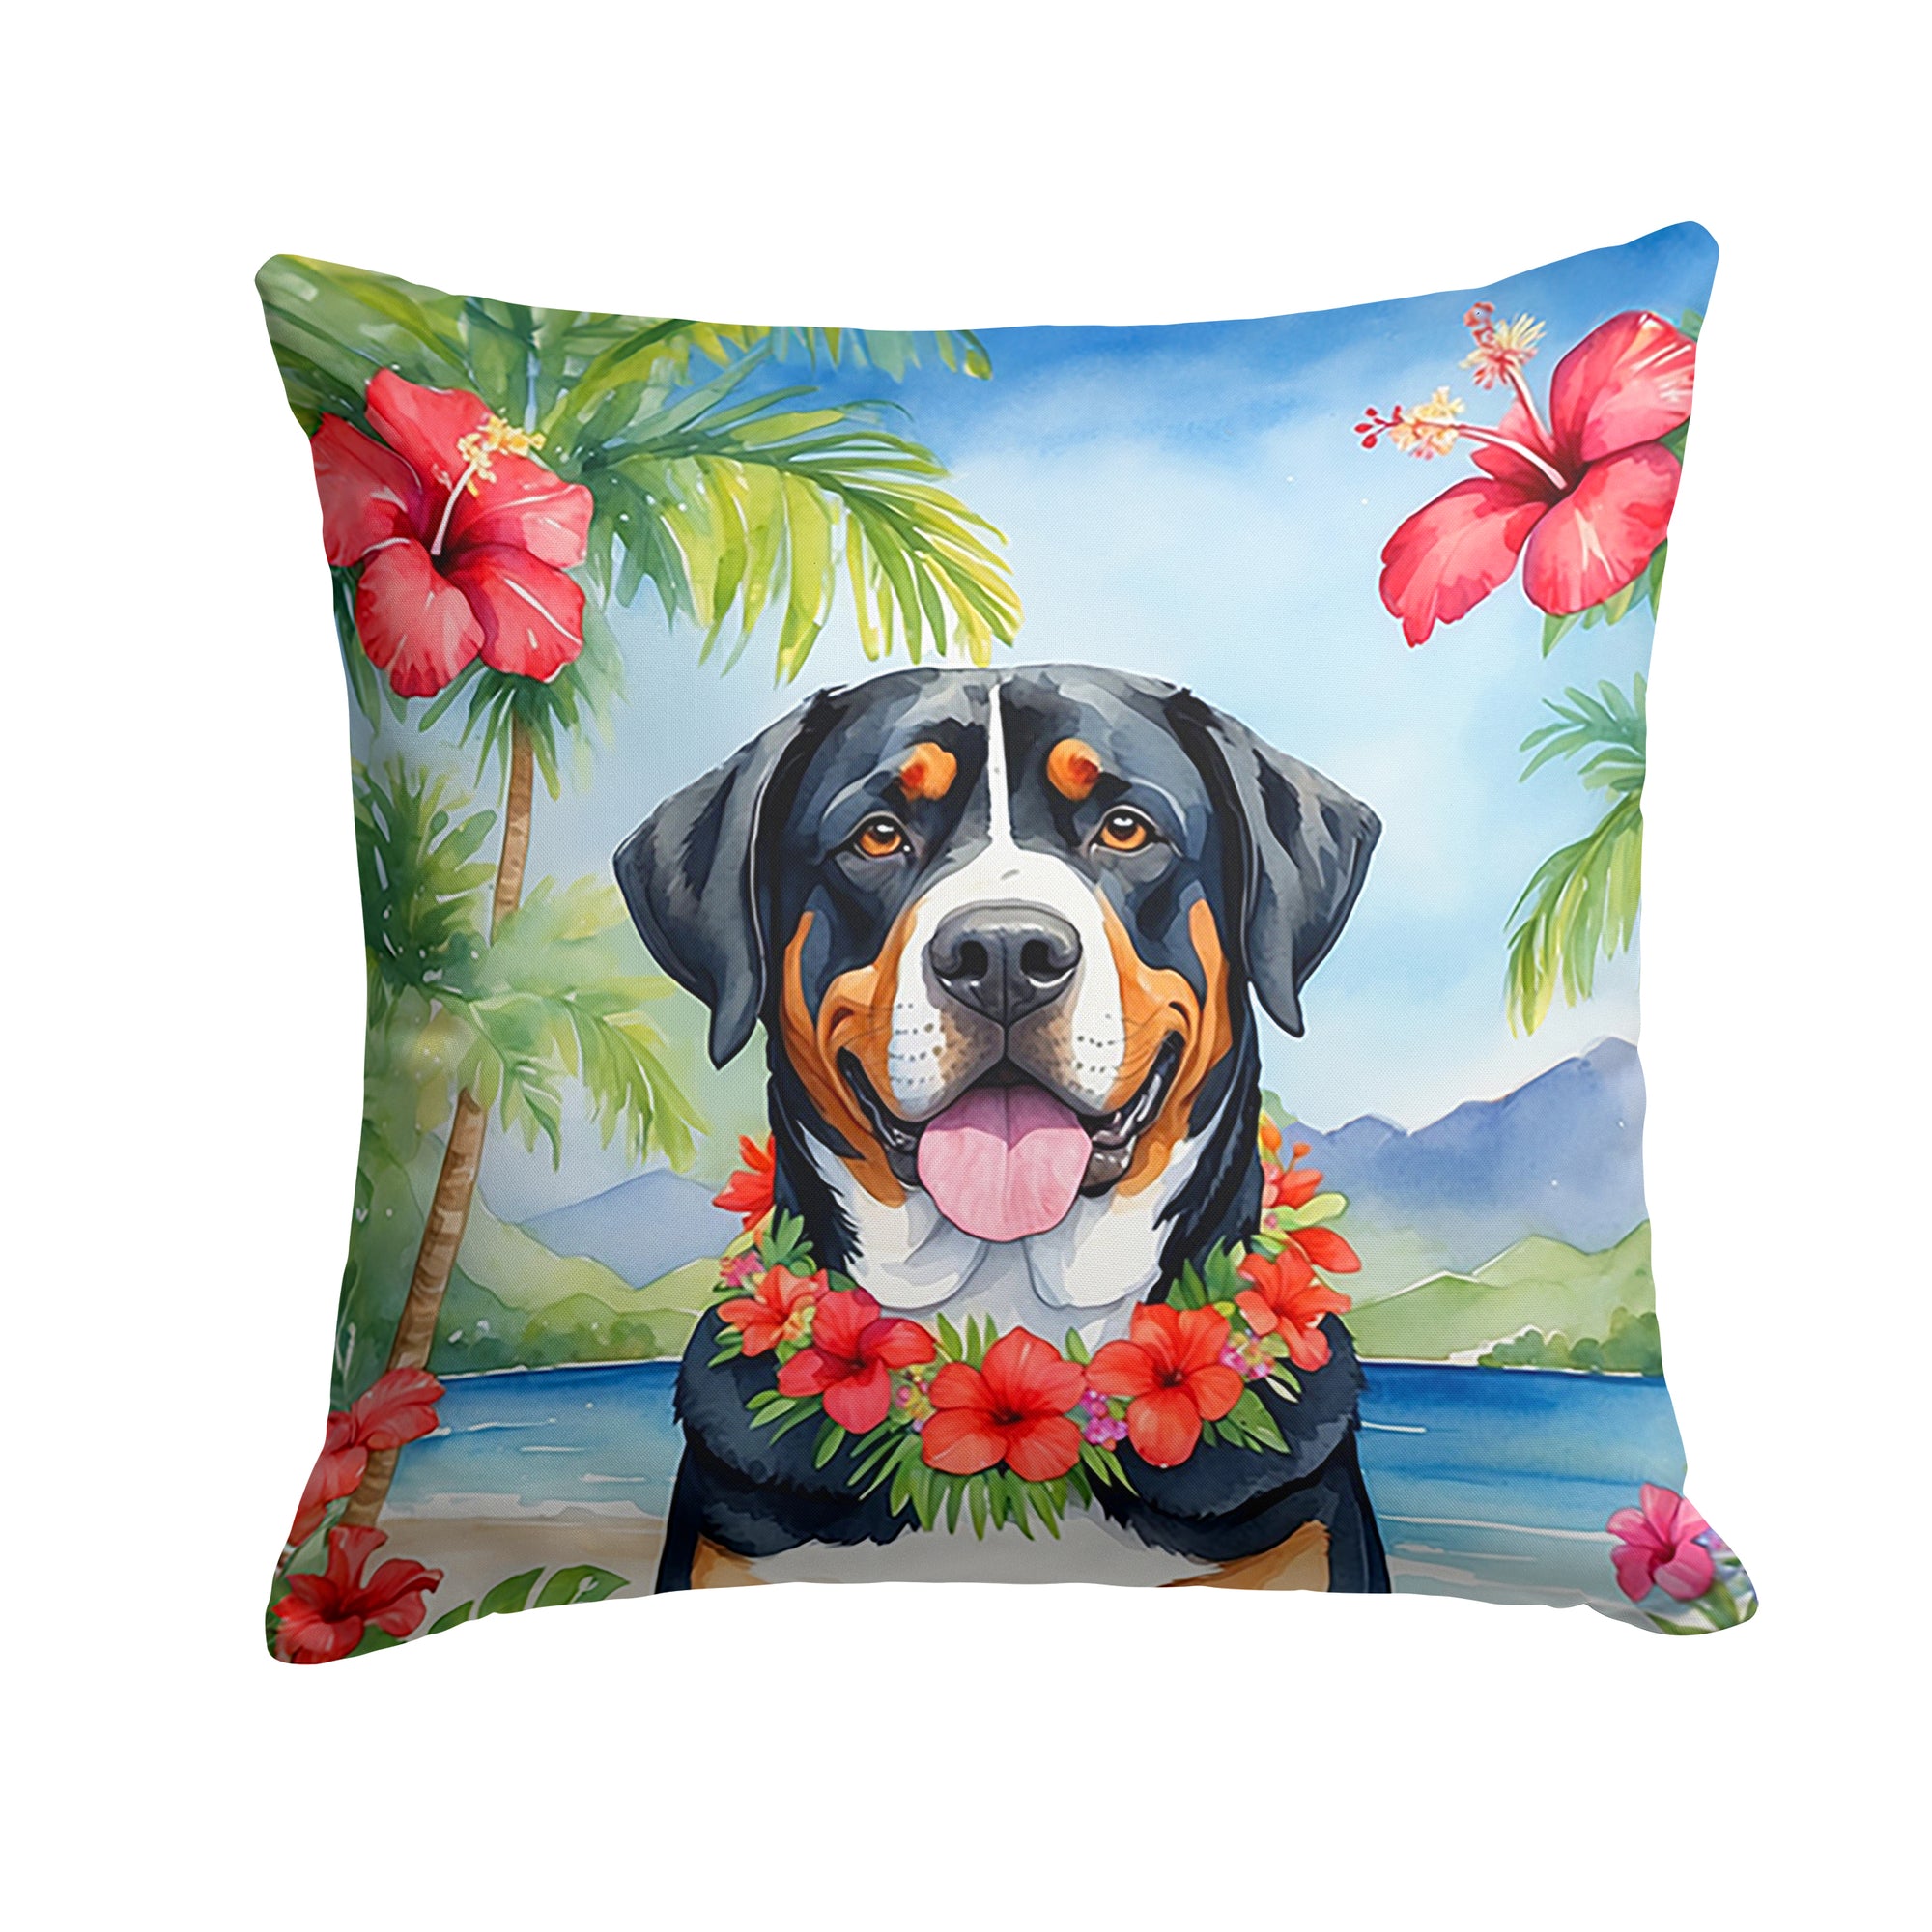 Buy this Greater Swiss Mountain Dog Luau Throw Pillow